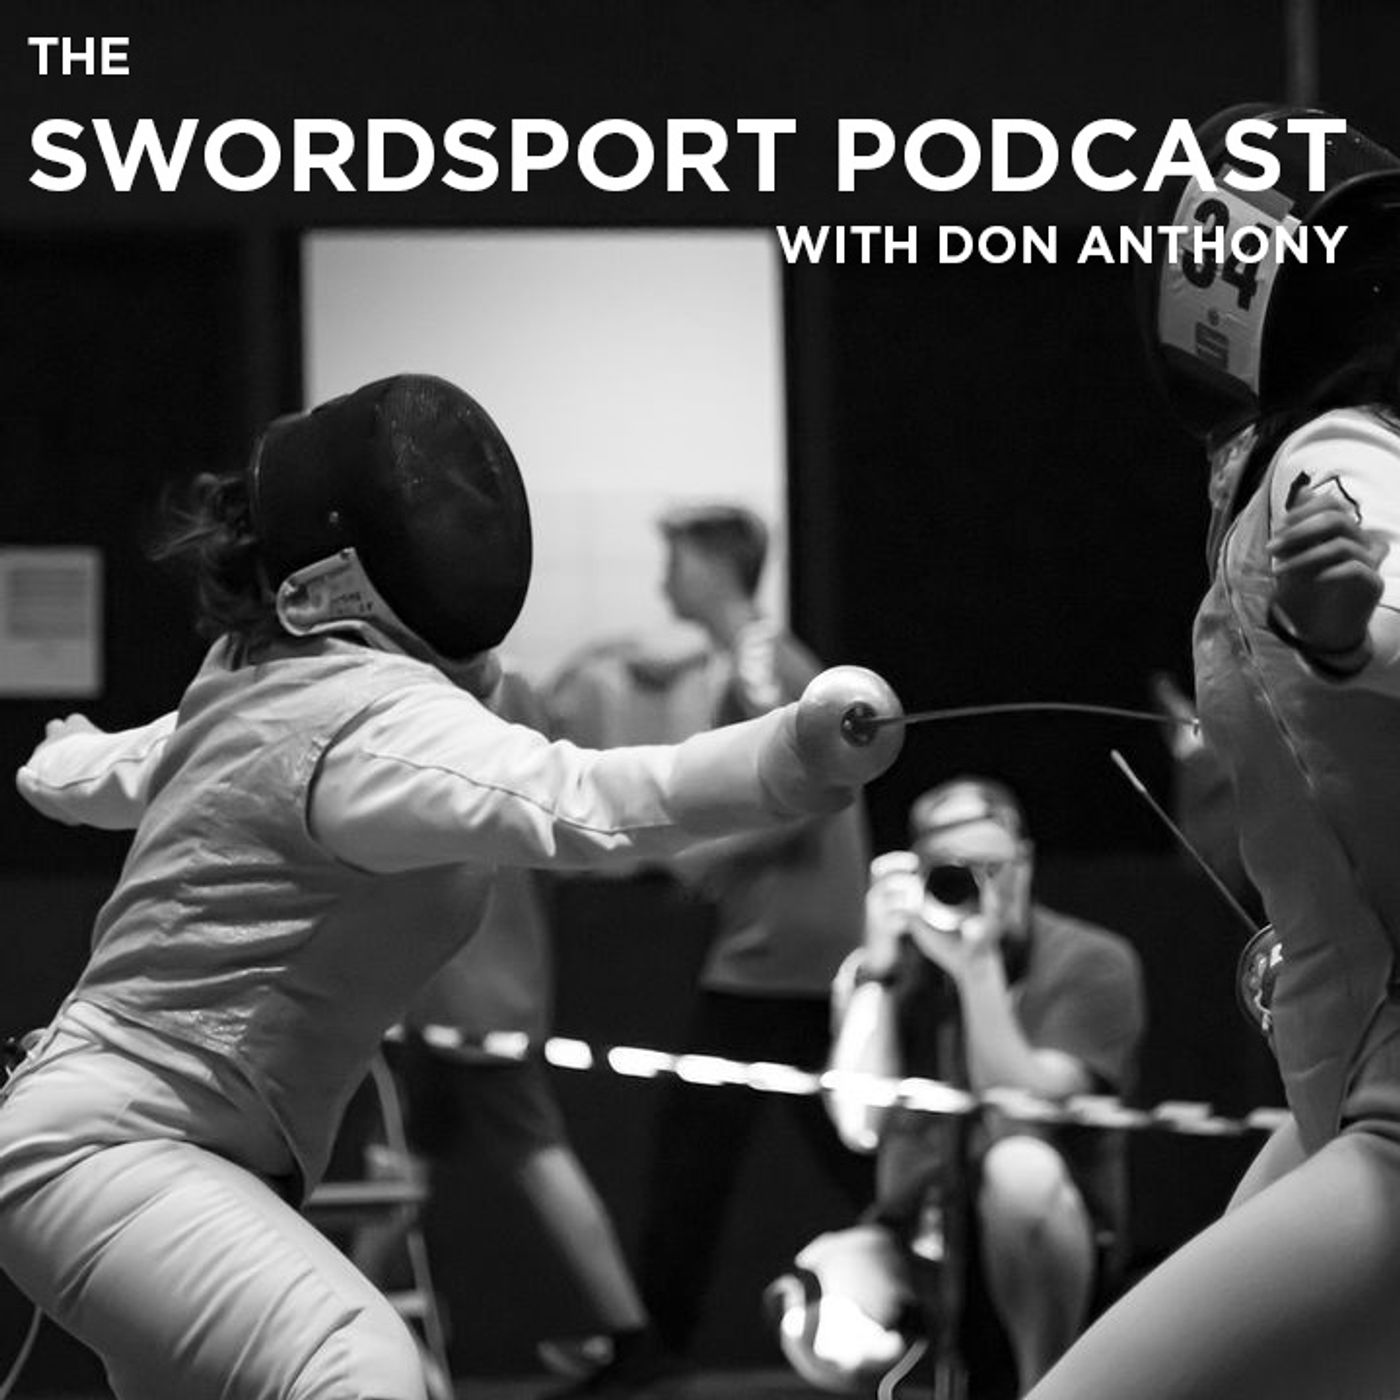 The Swordsport Podcast